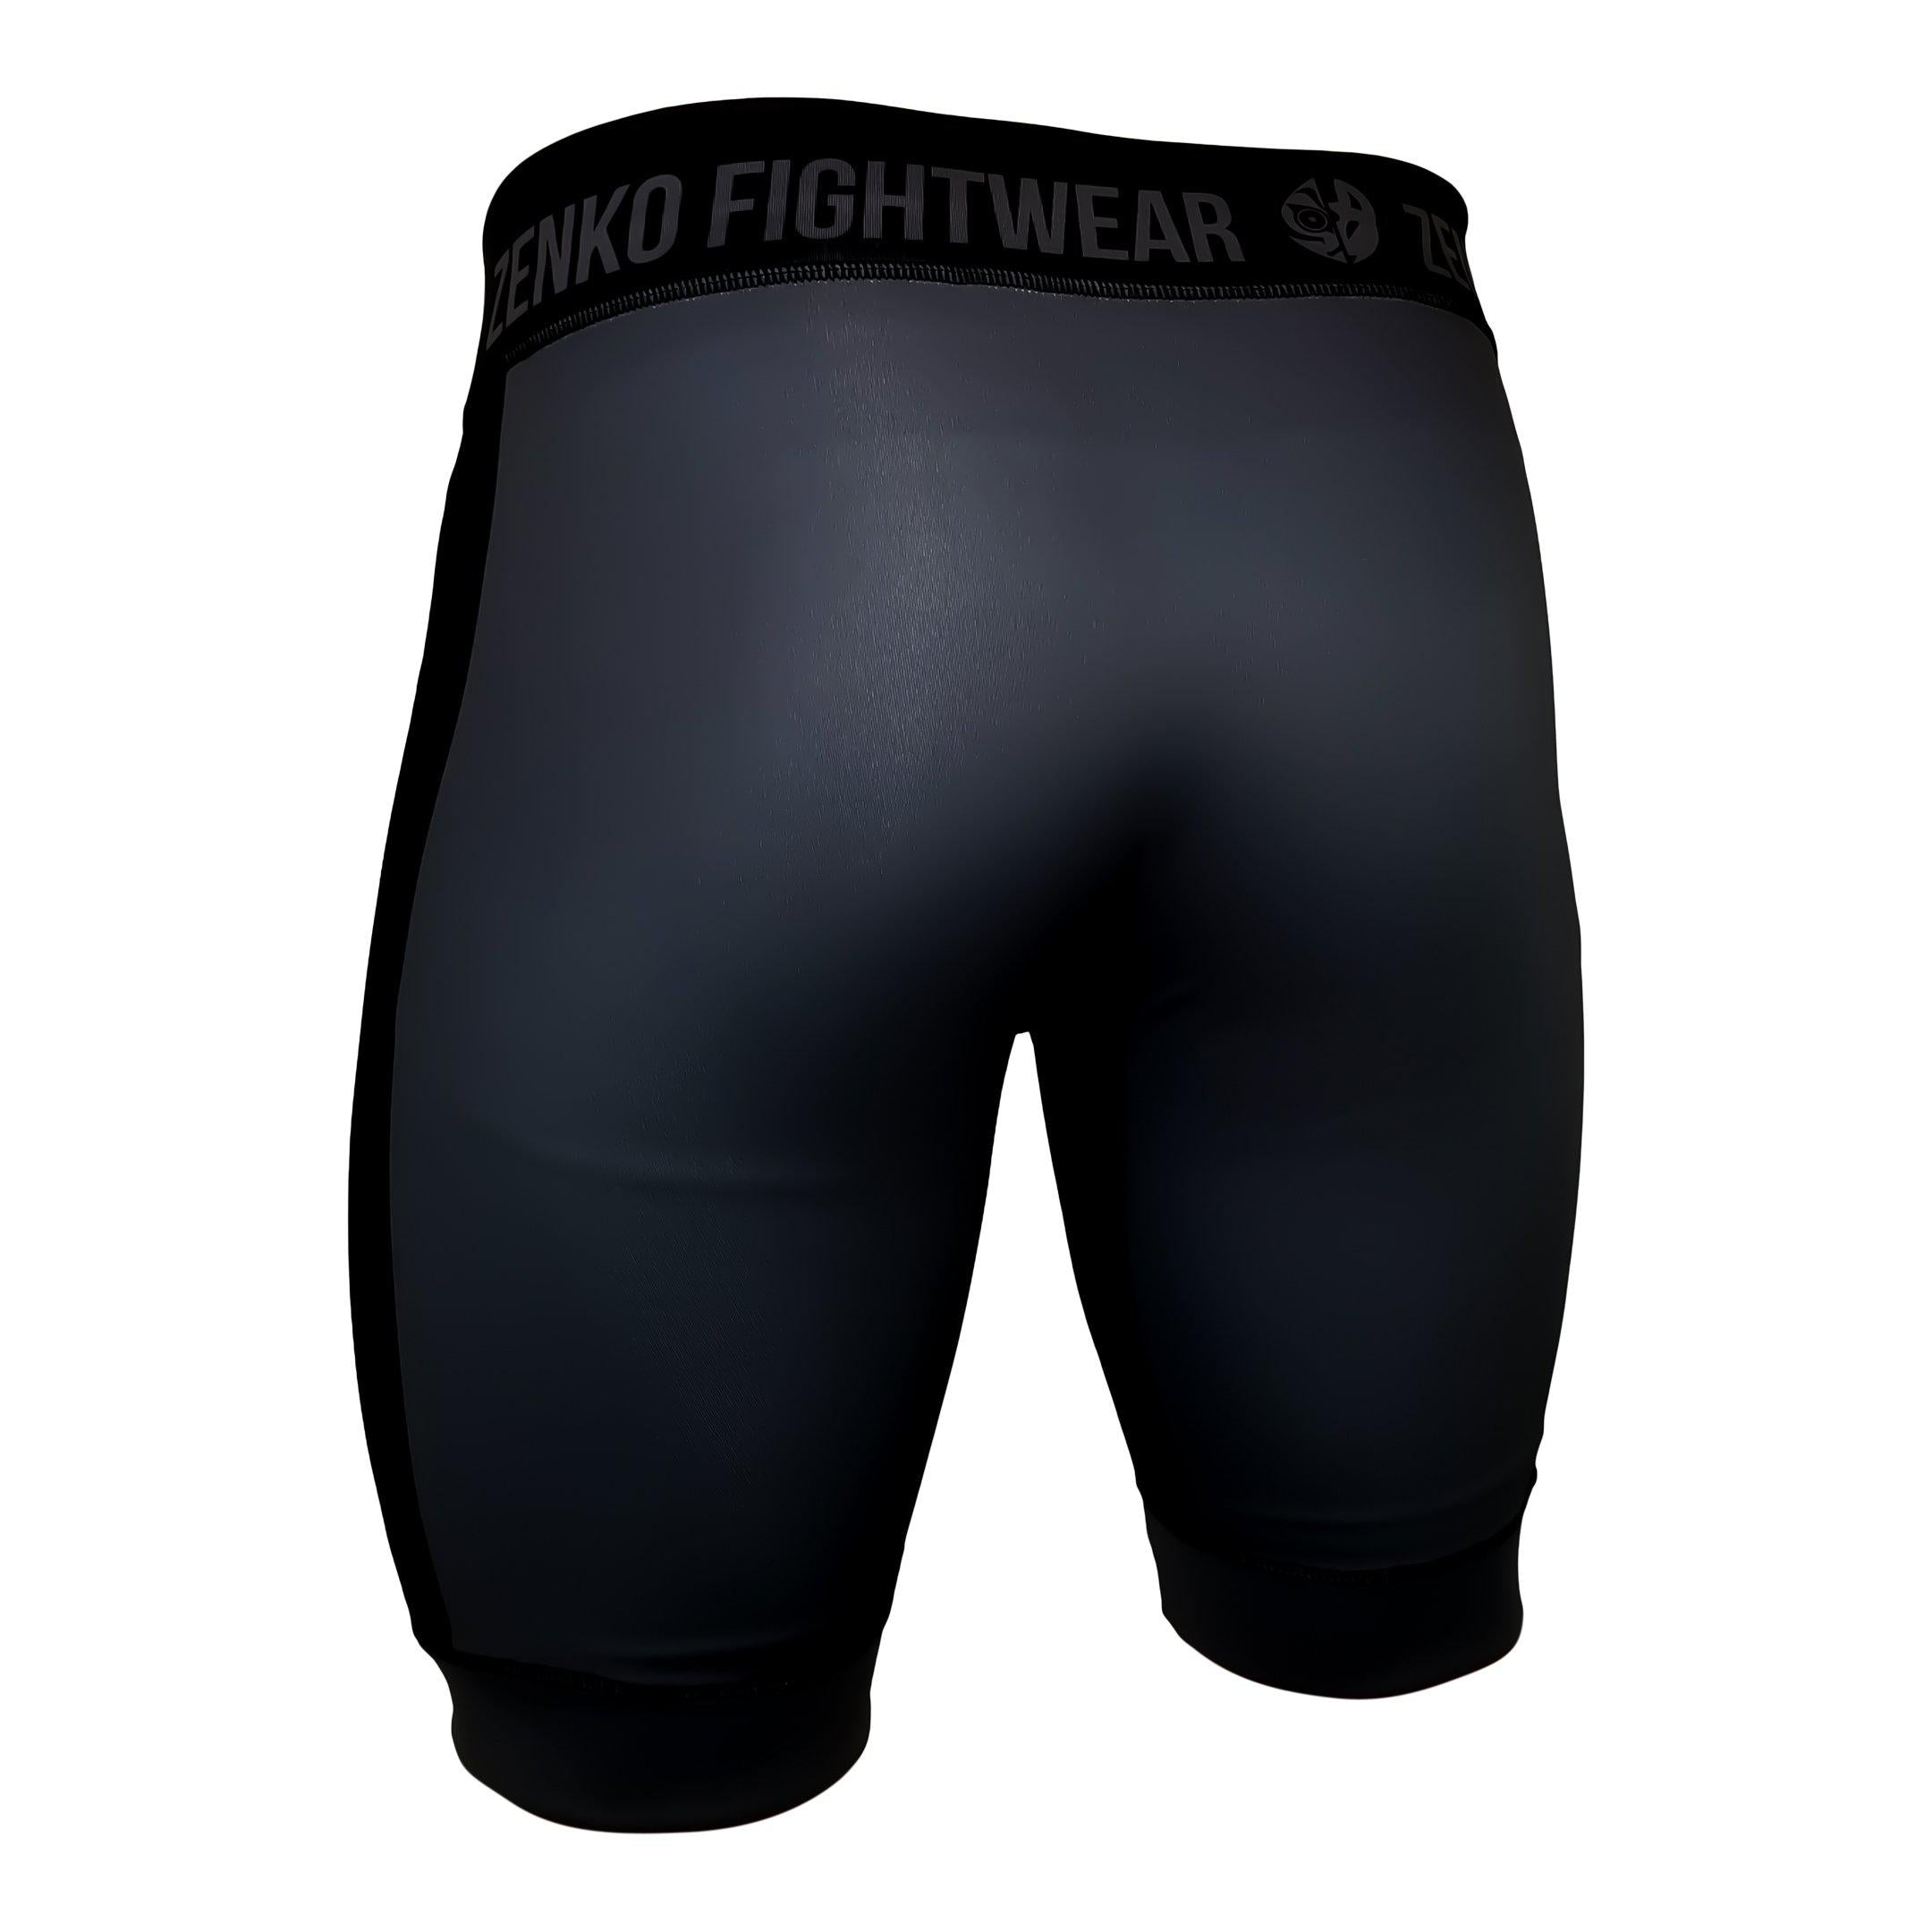 Zenko Fightwear Jet Gray Vale Tudo Compression Shorts Back